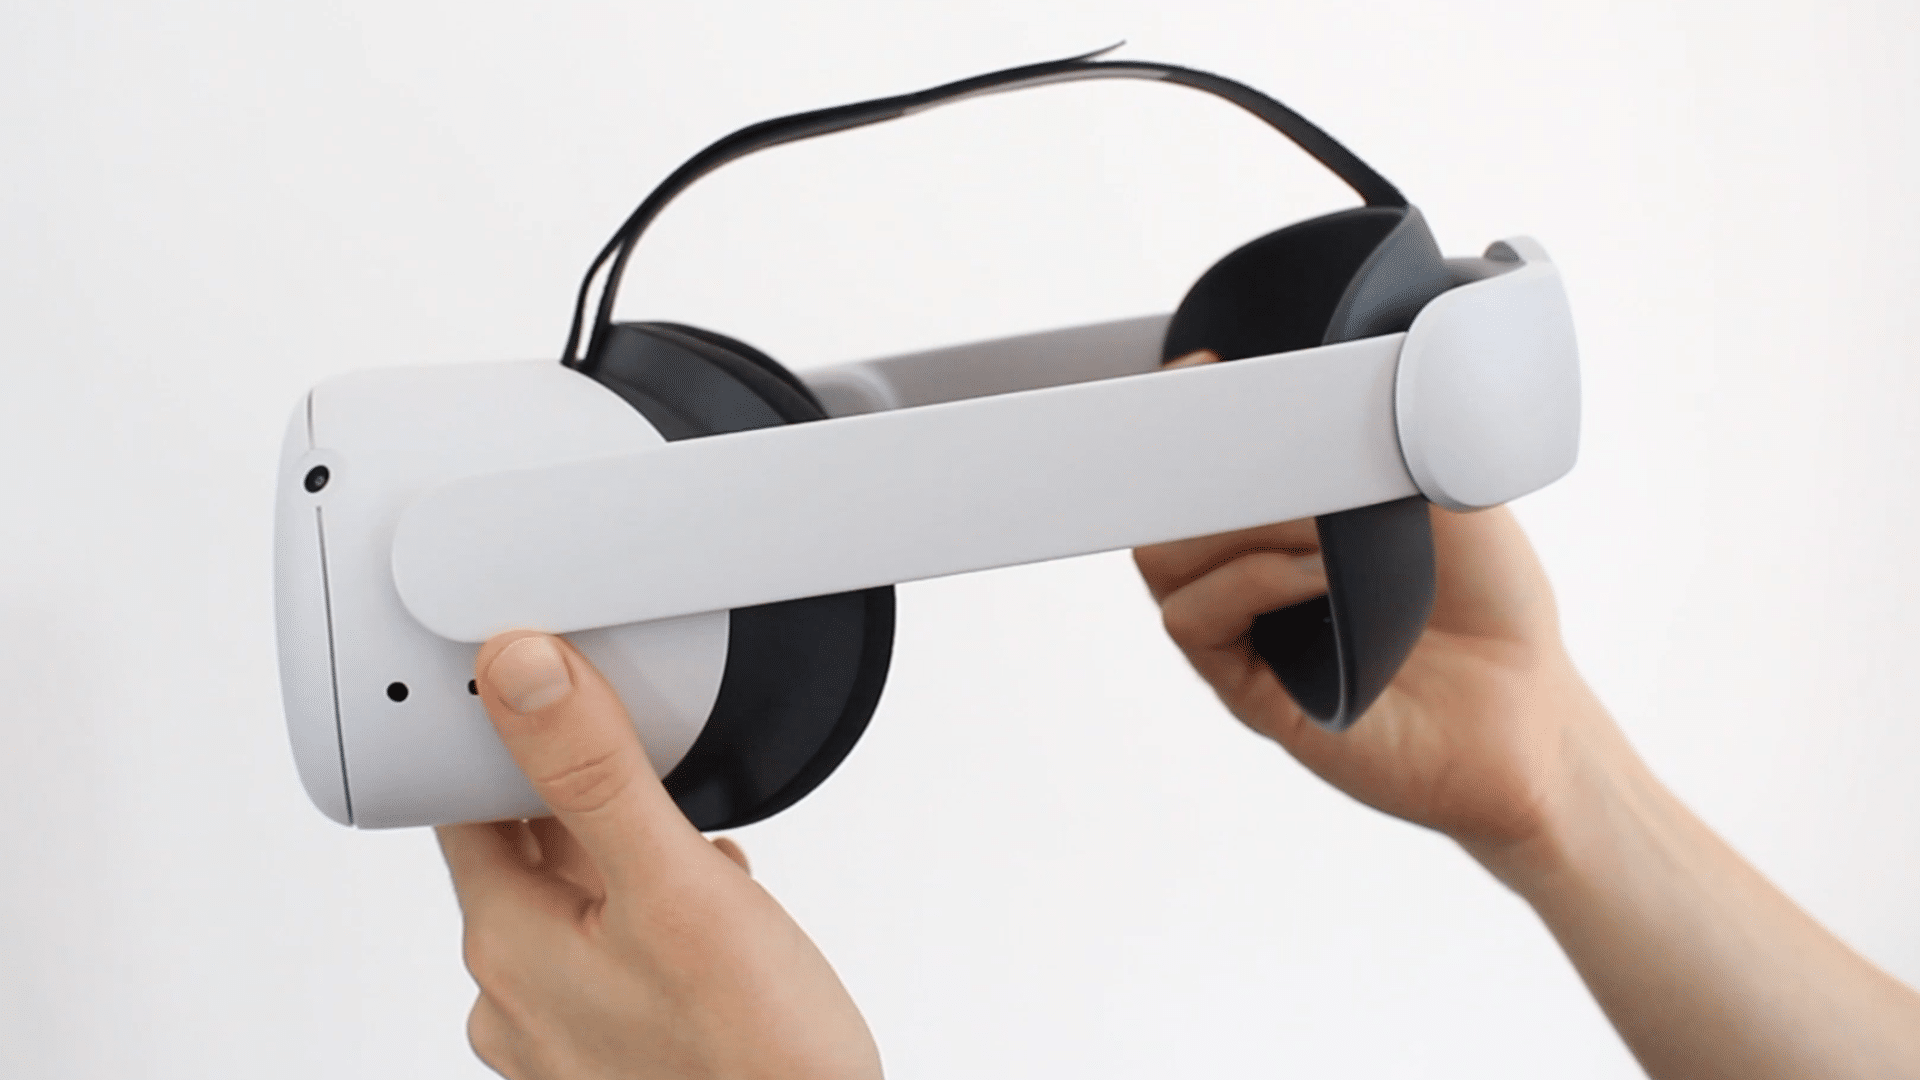 Replace Adjustable Elite Strap for Oculus Quest 2 Head Strap